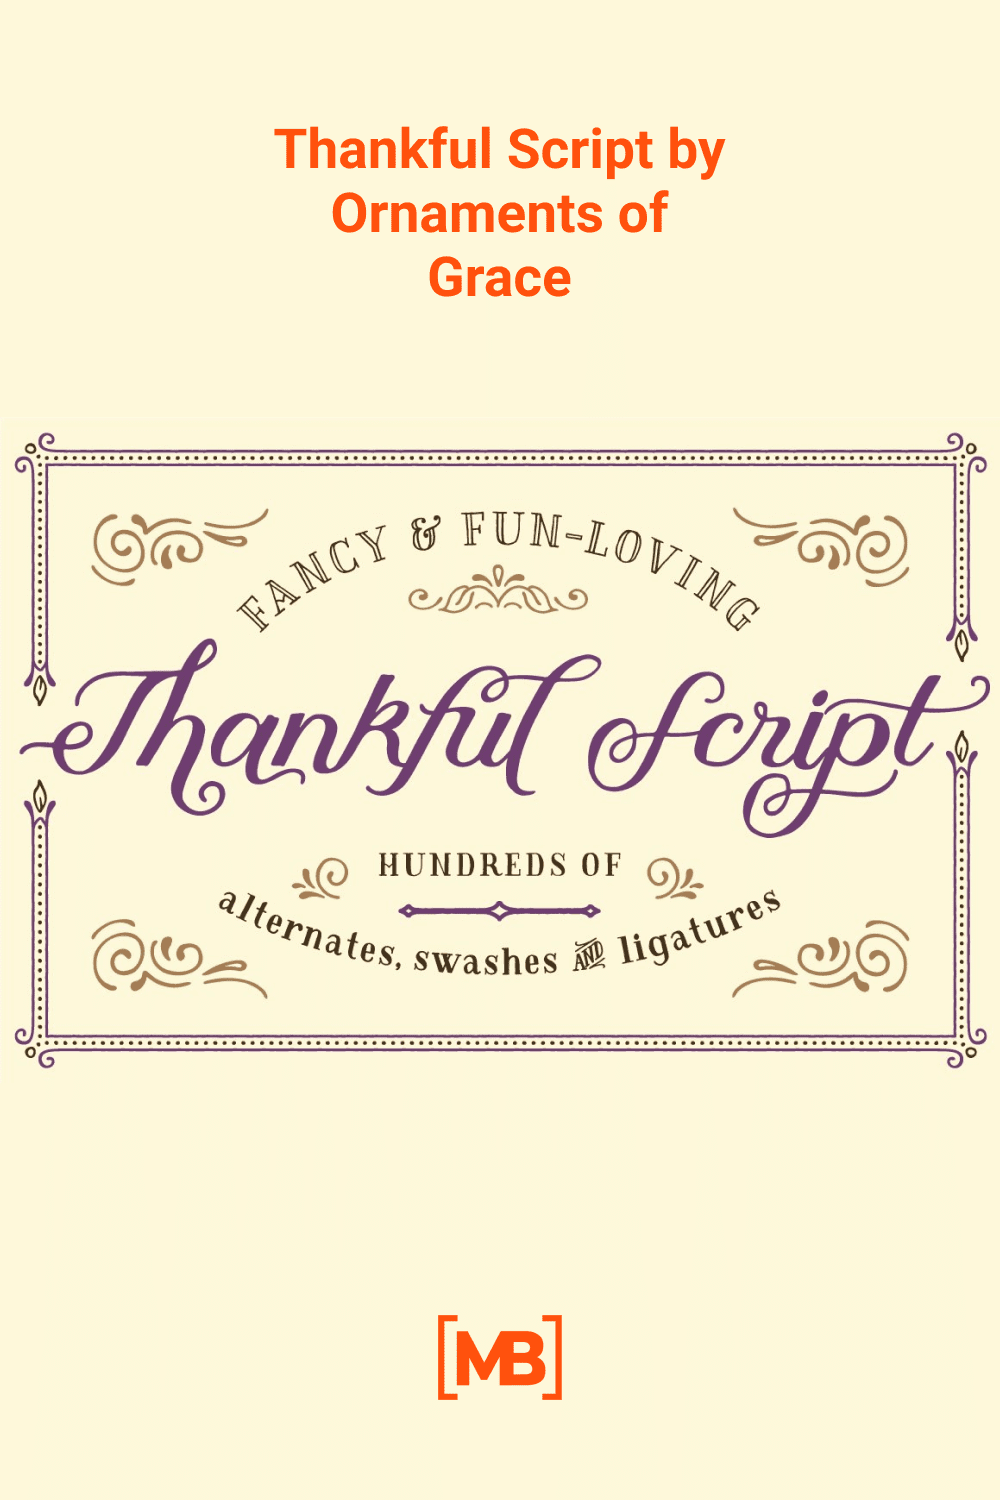 Thankful Script by Ornaments of Grace.